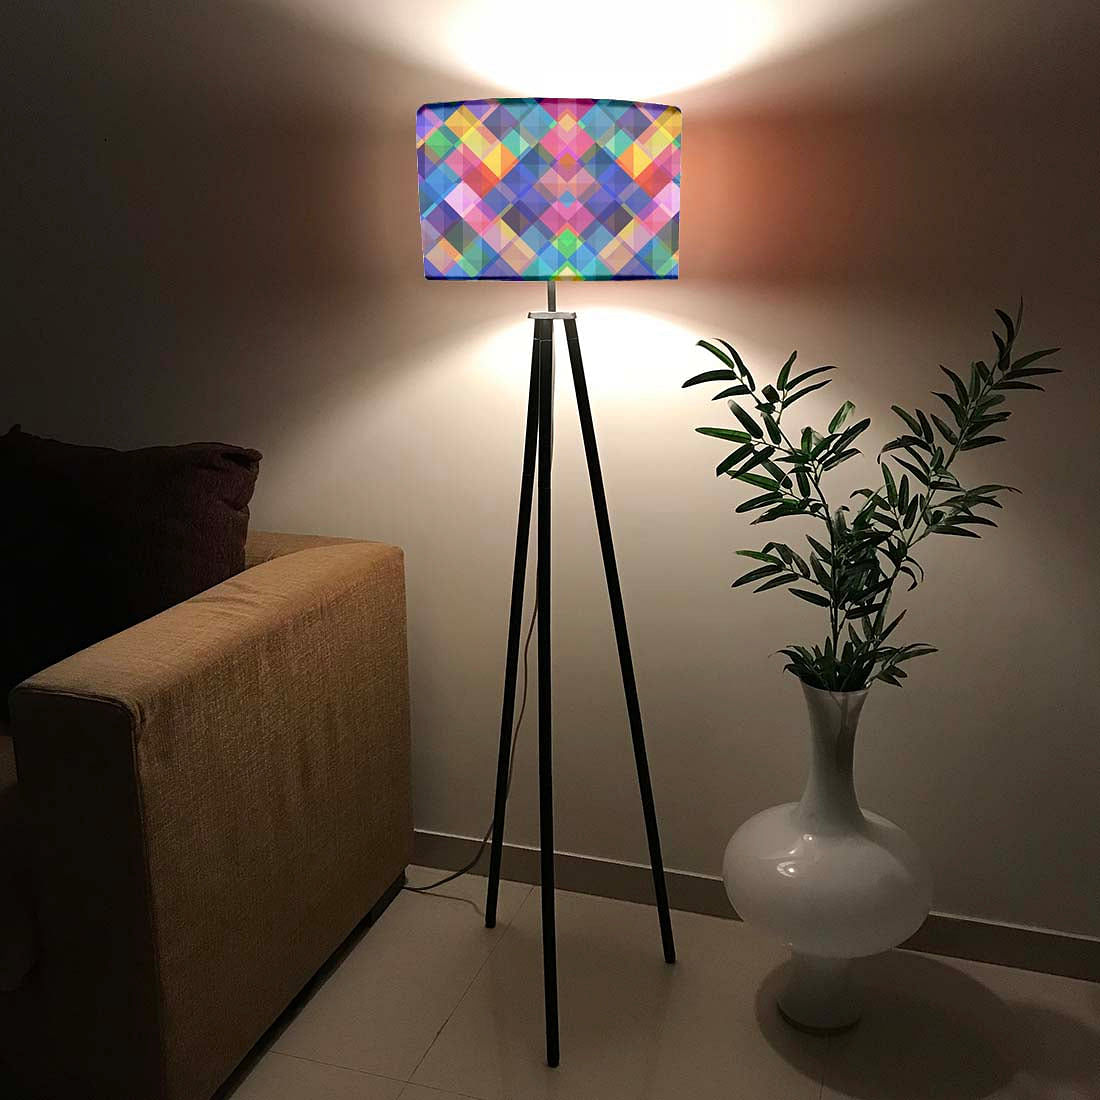 Metal Tripod Floor Lamp in Bedroom Standing Light Nutcase